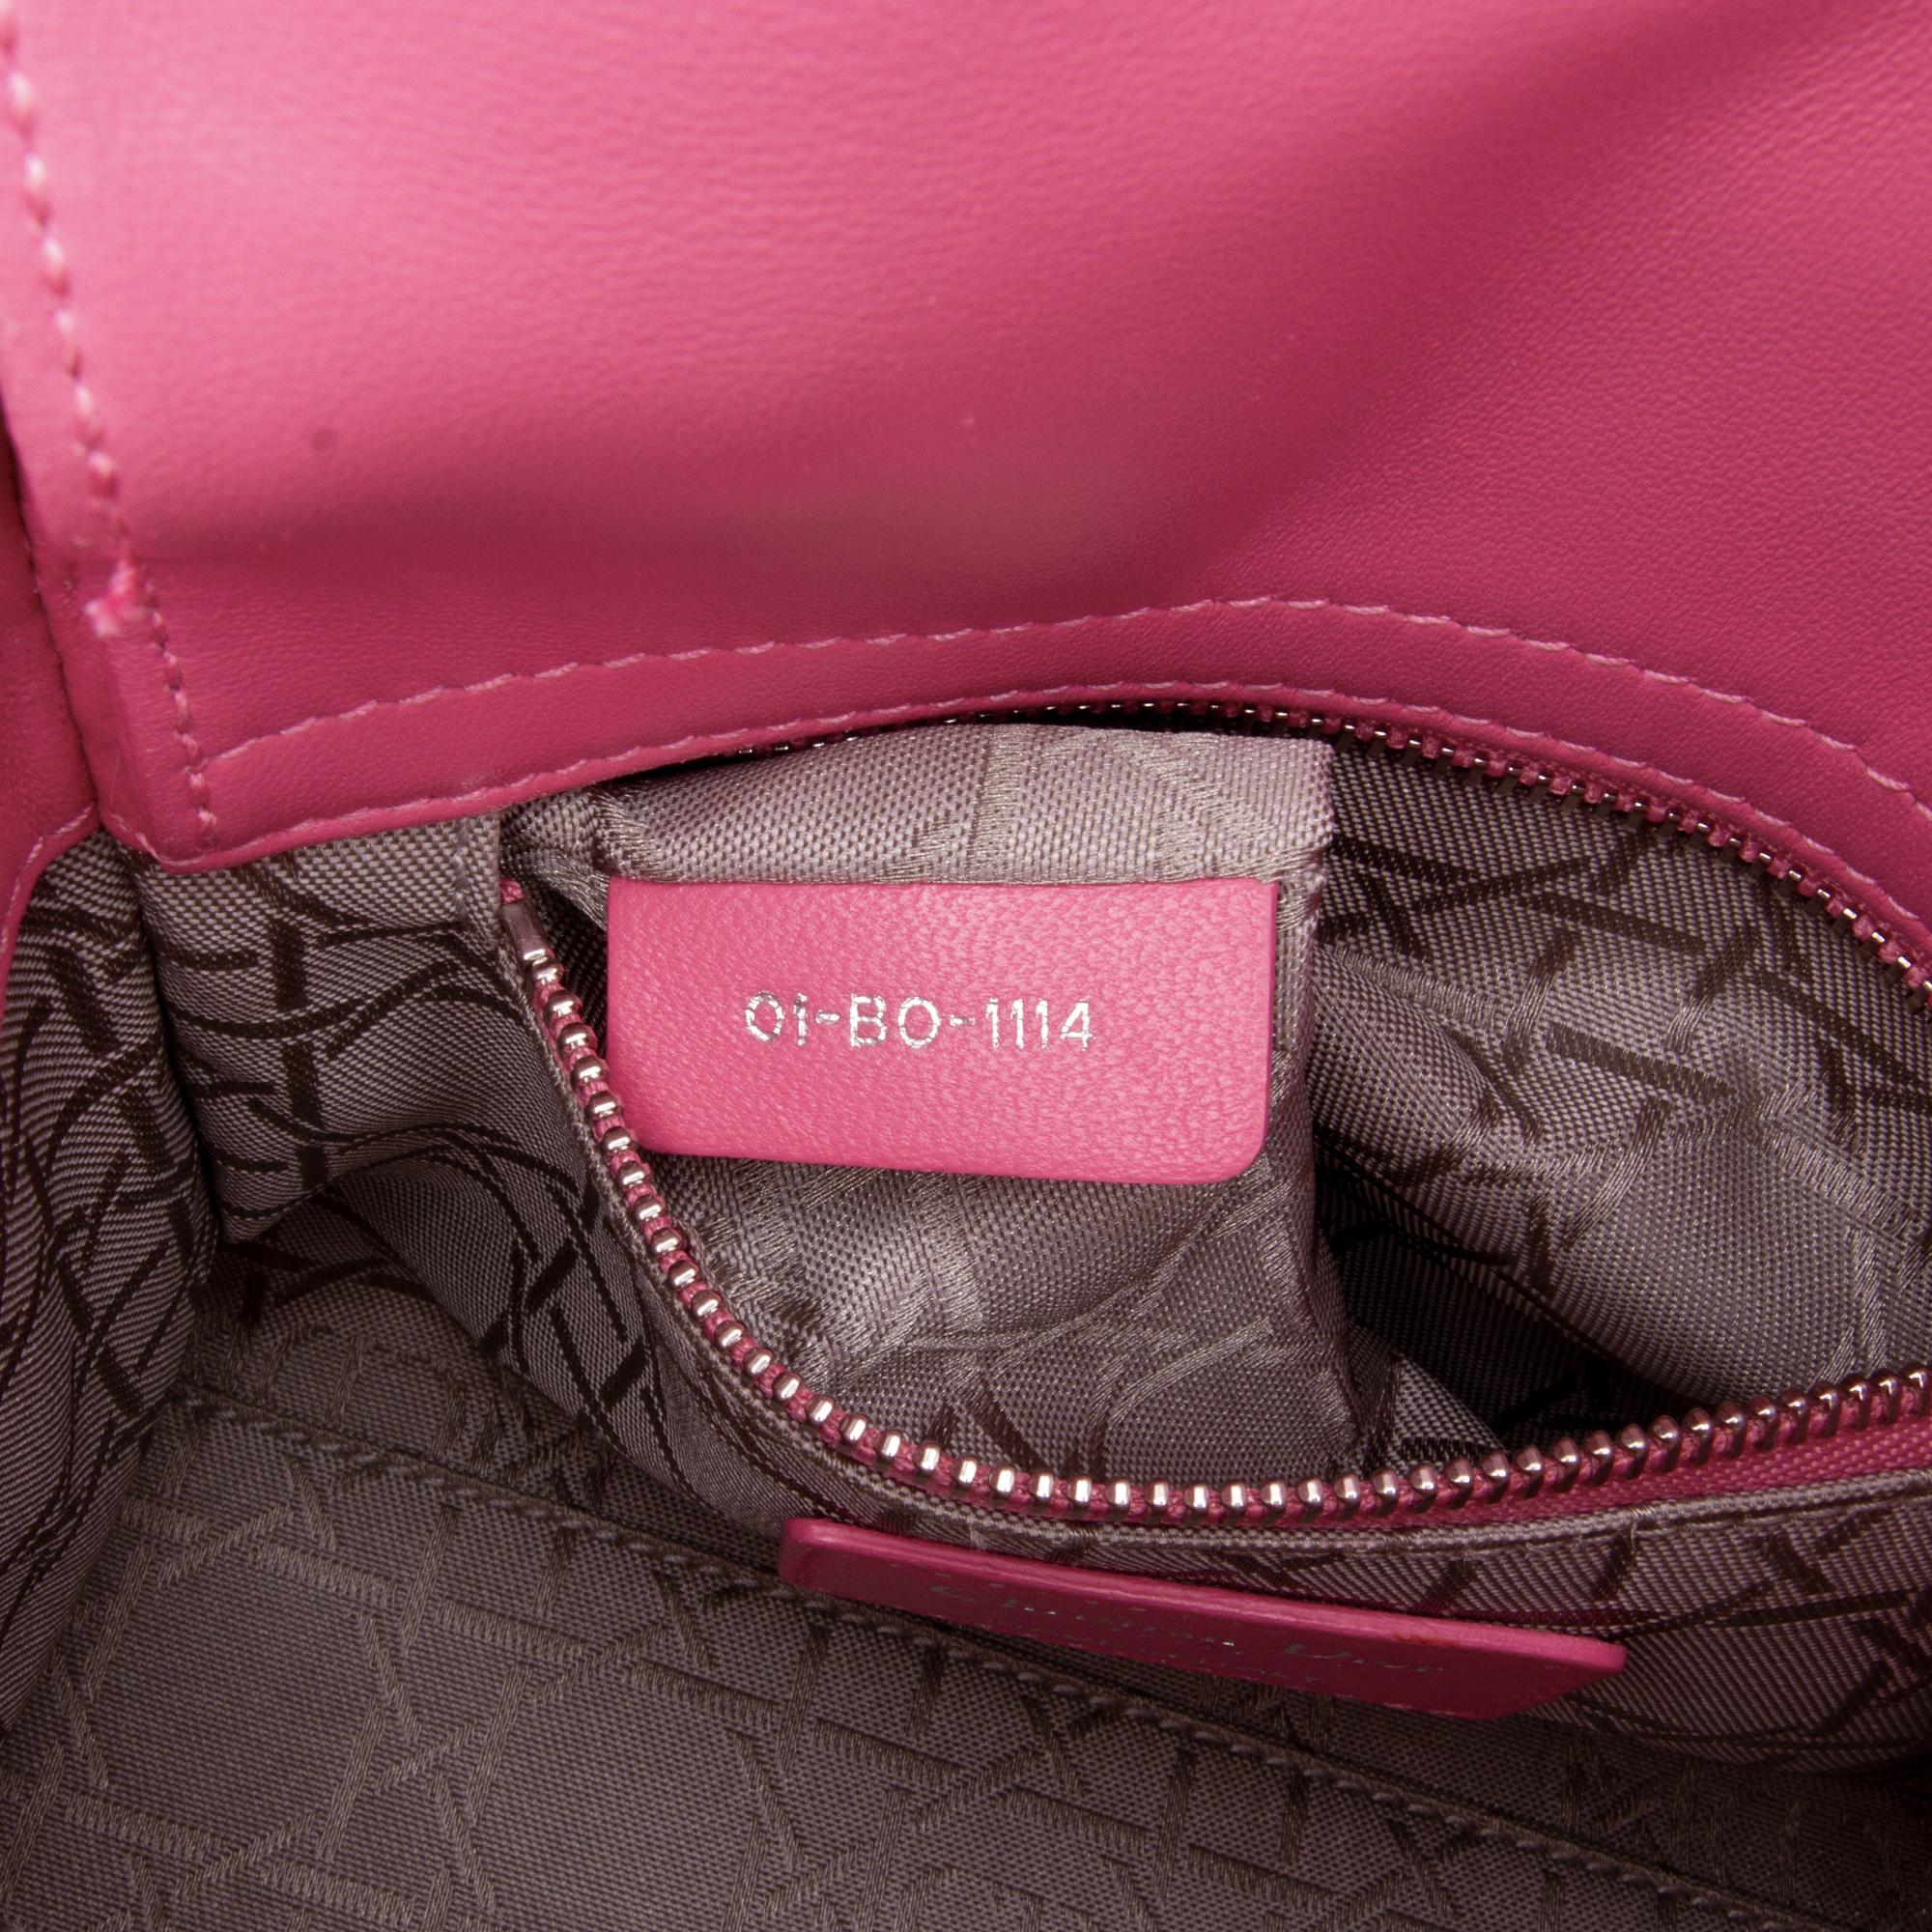 Dior Pink Mini Lambskin Cannage Lady Dior